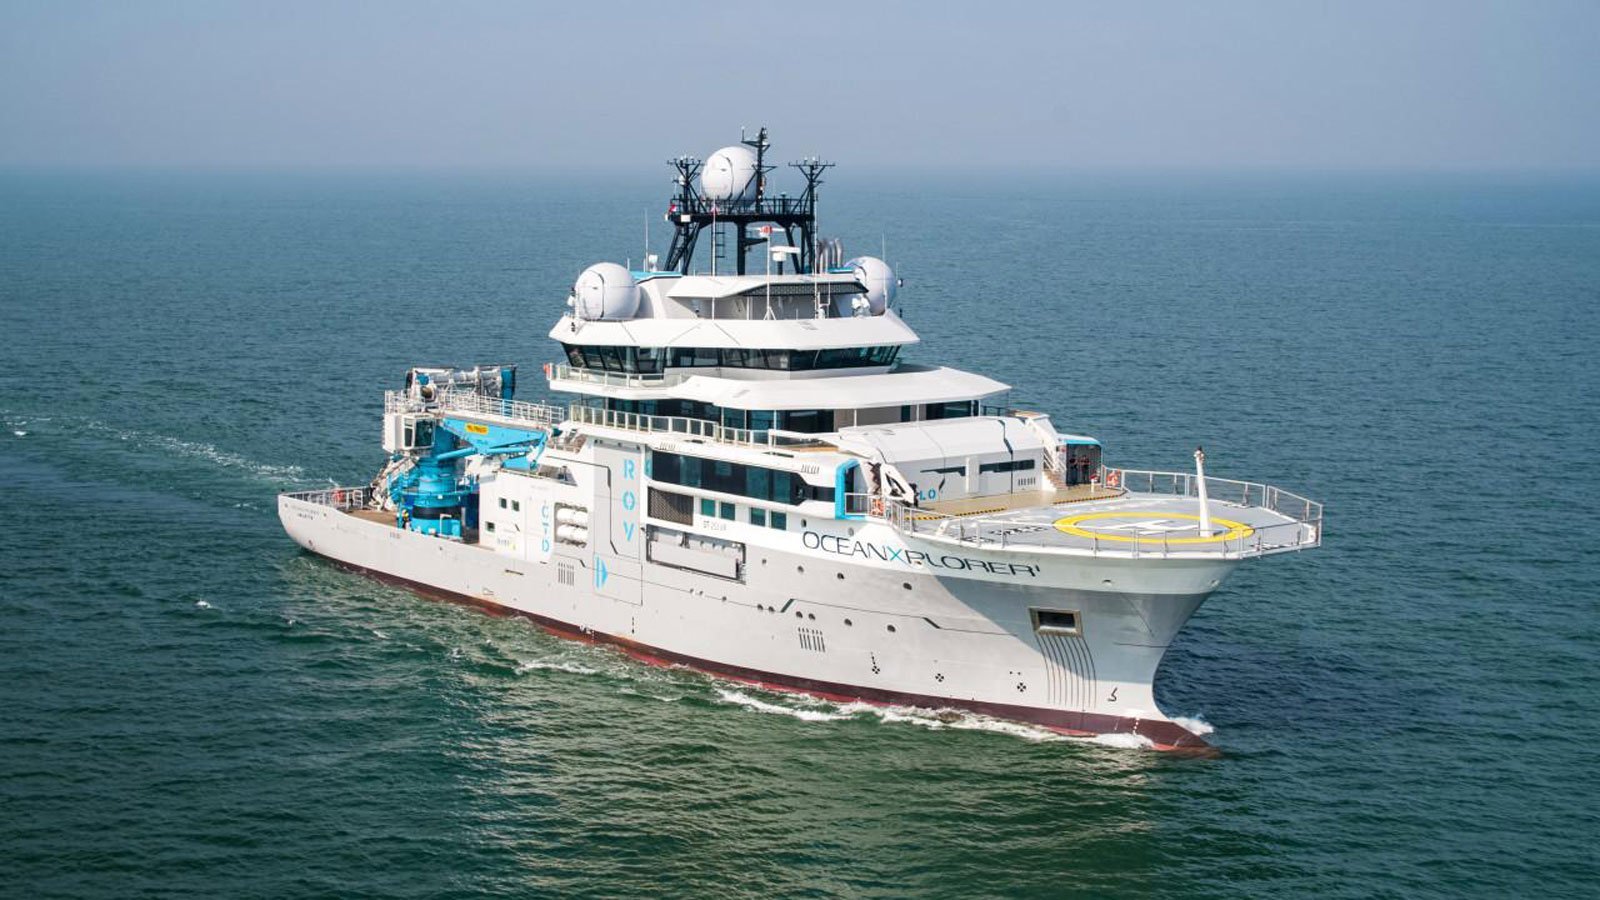 OCEANXPLORER Yacht • Freire • 2010 • Owner Ray Dalio